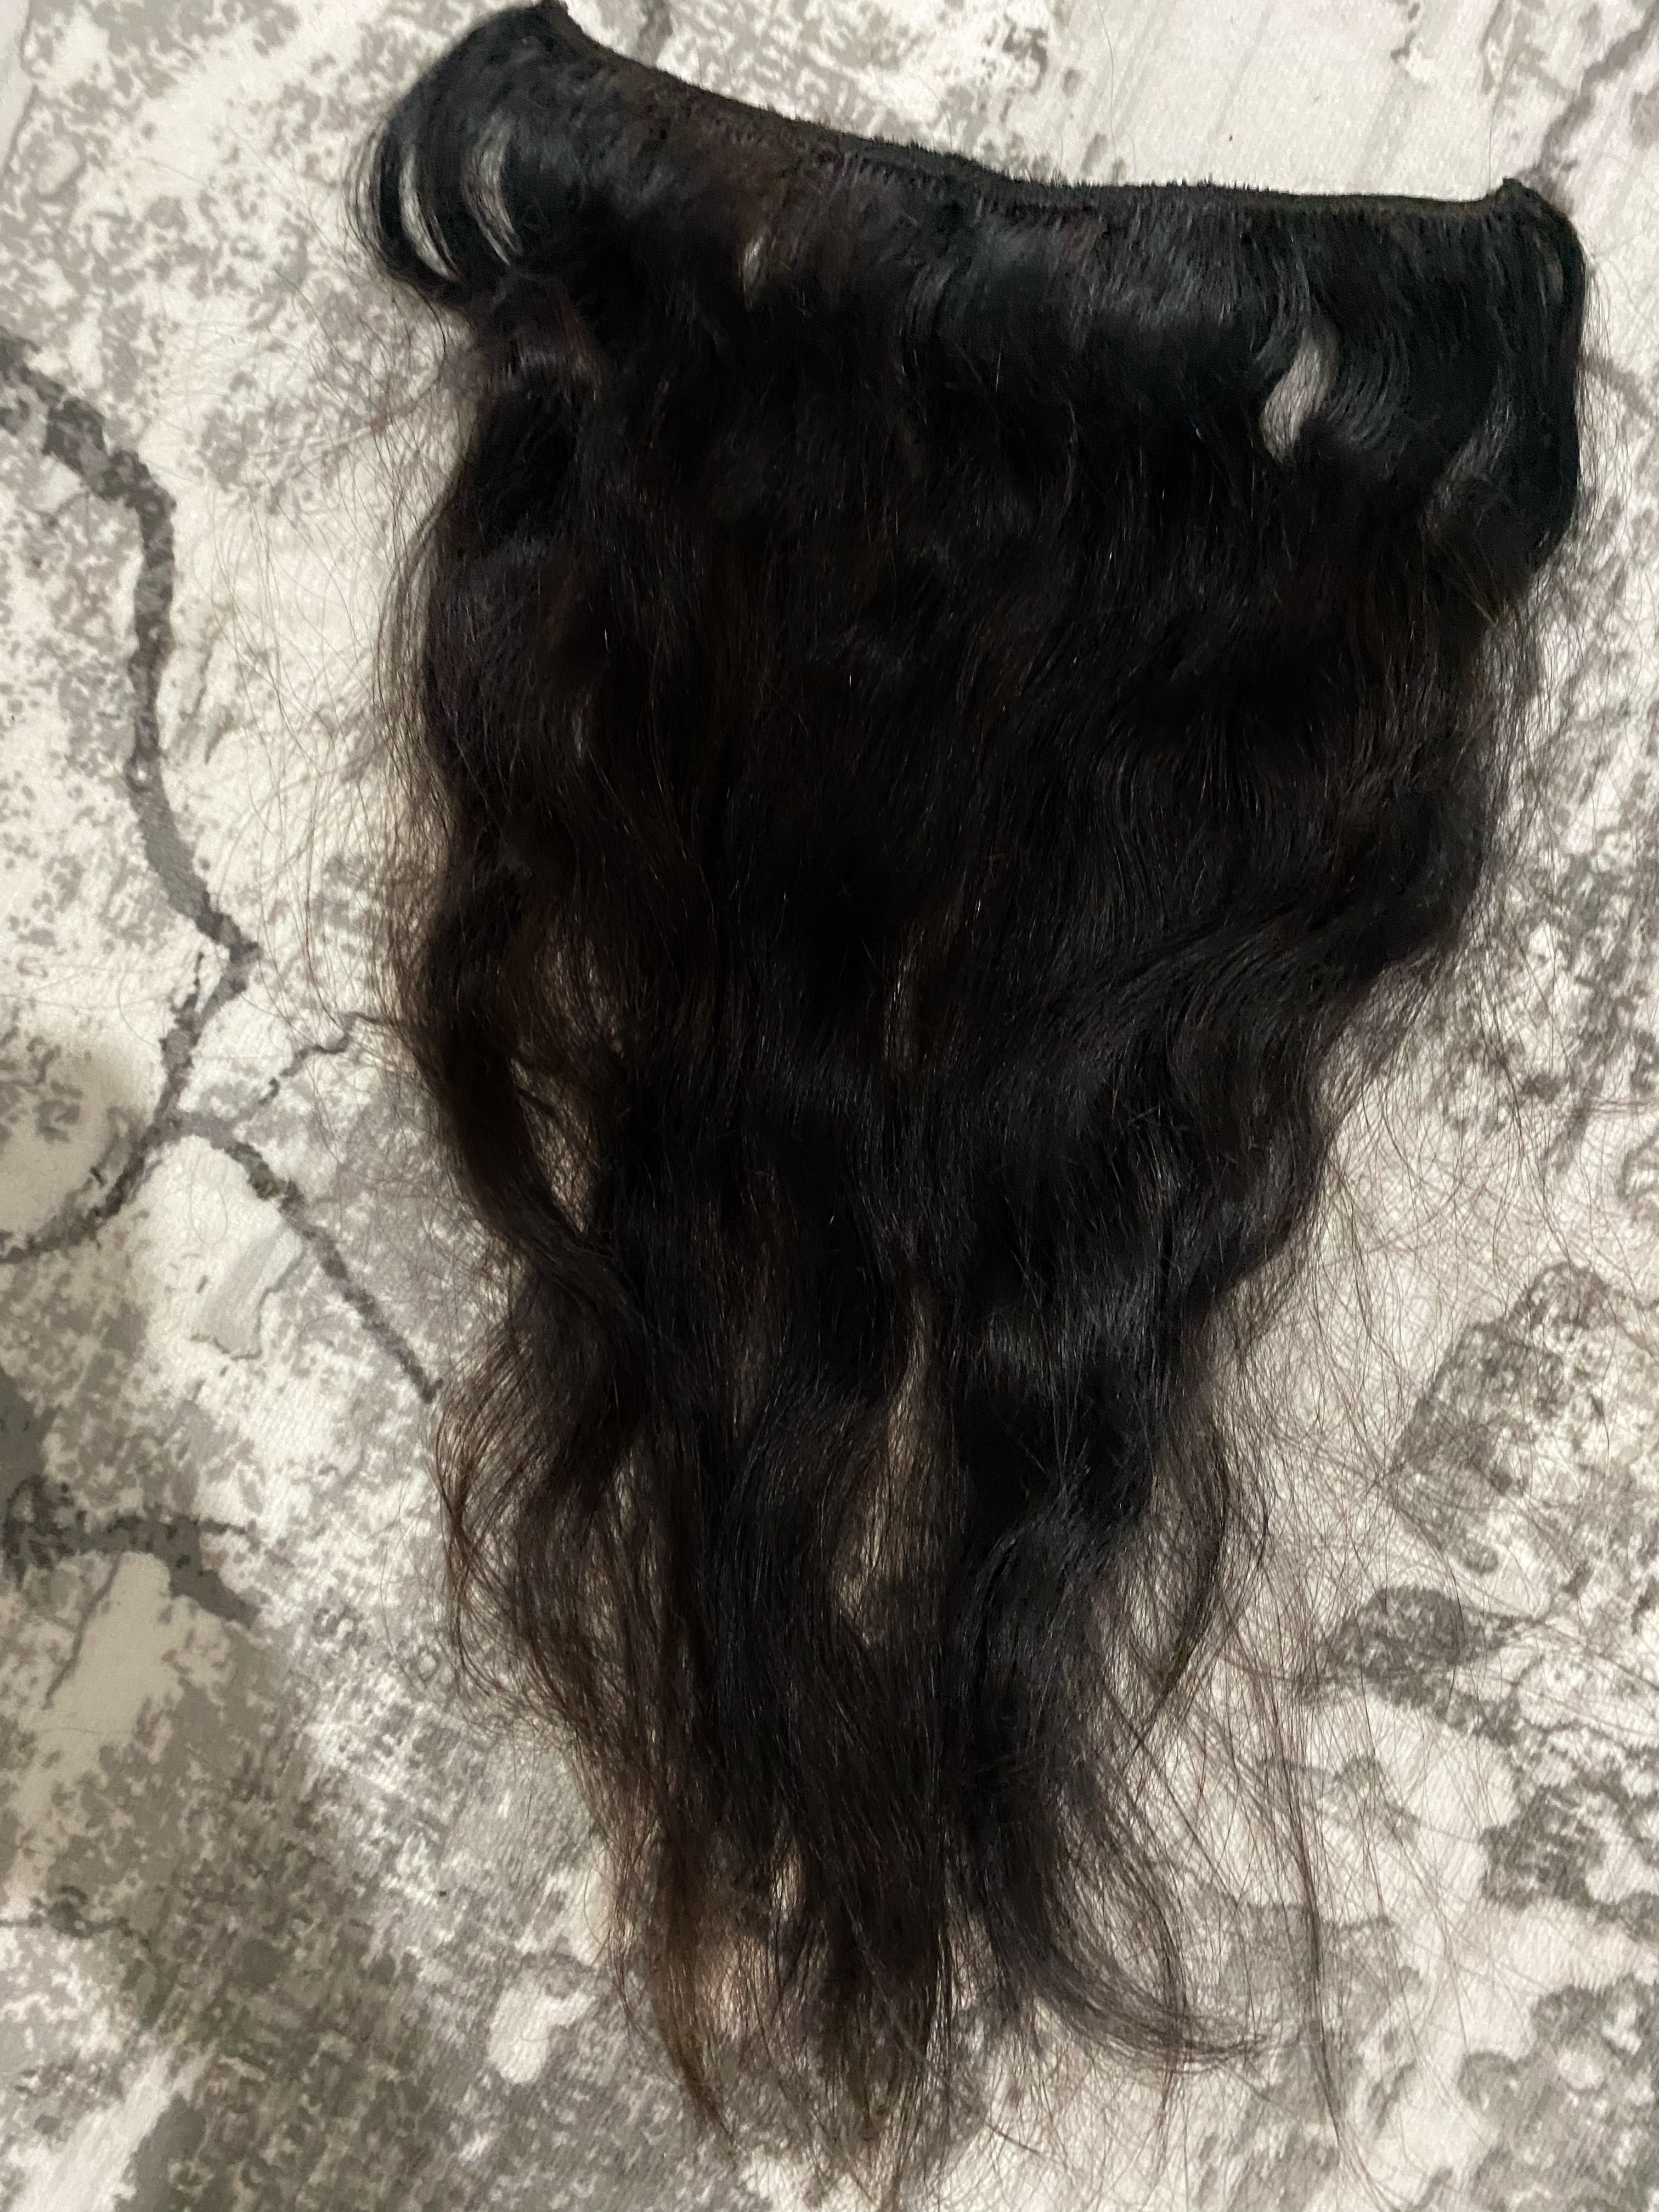 150гр 55см индийска коса : тресите са на 3 реда